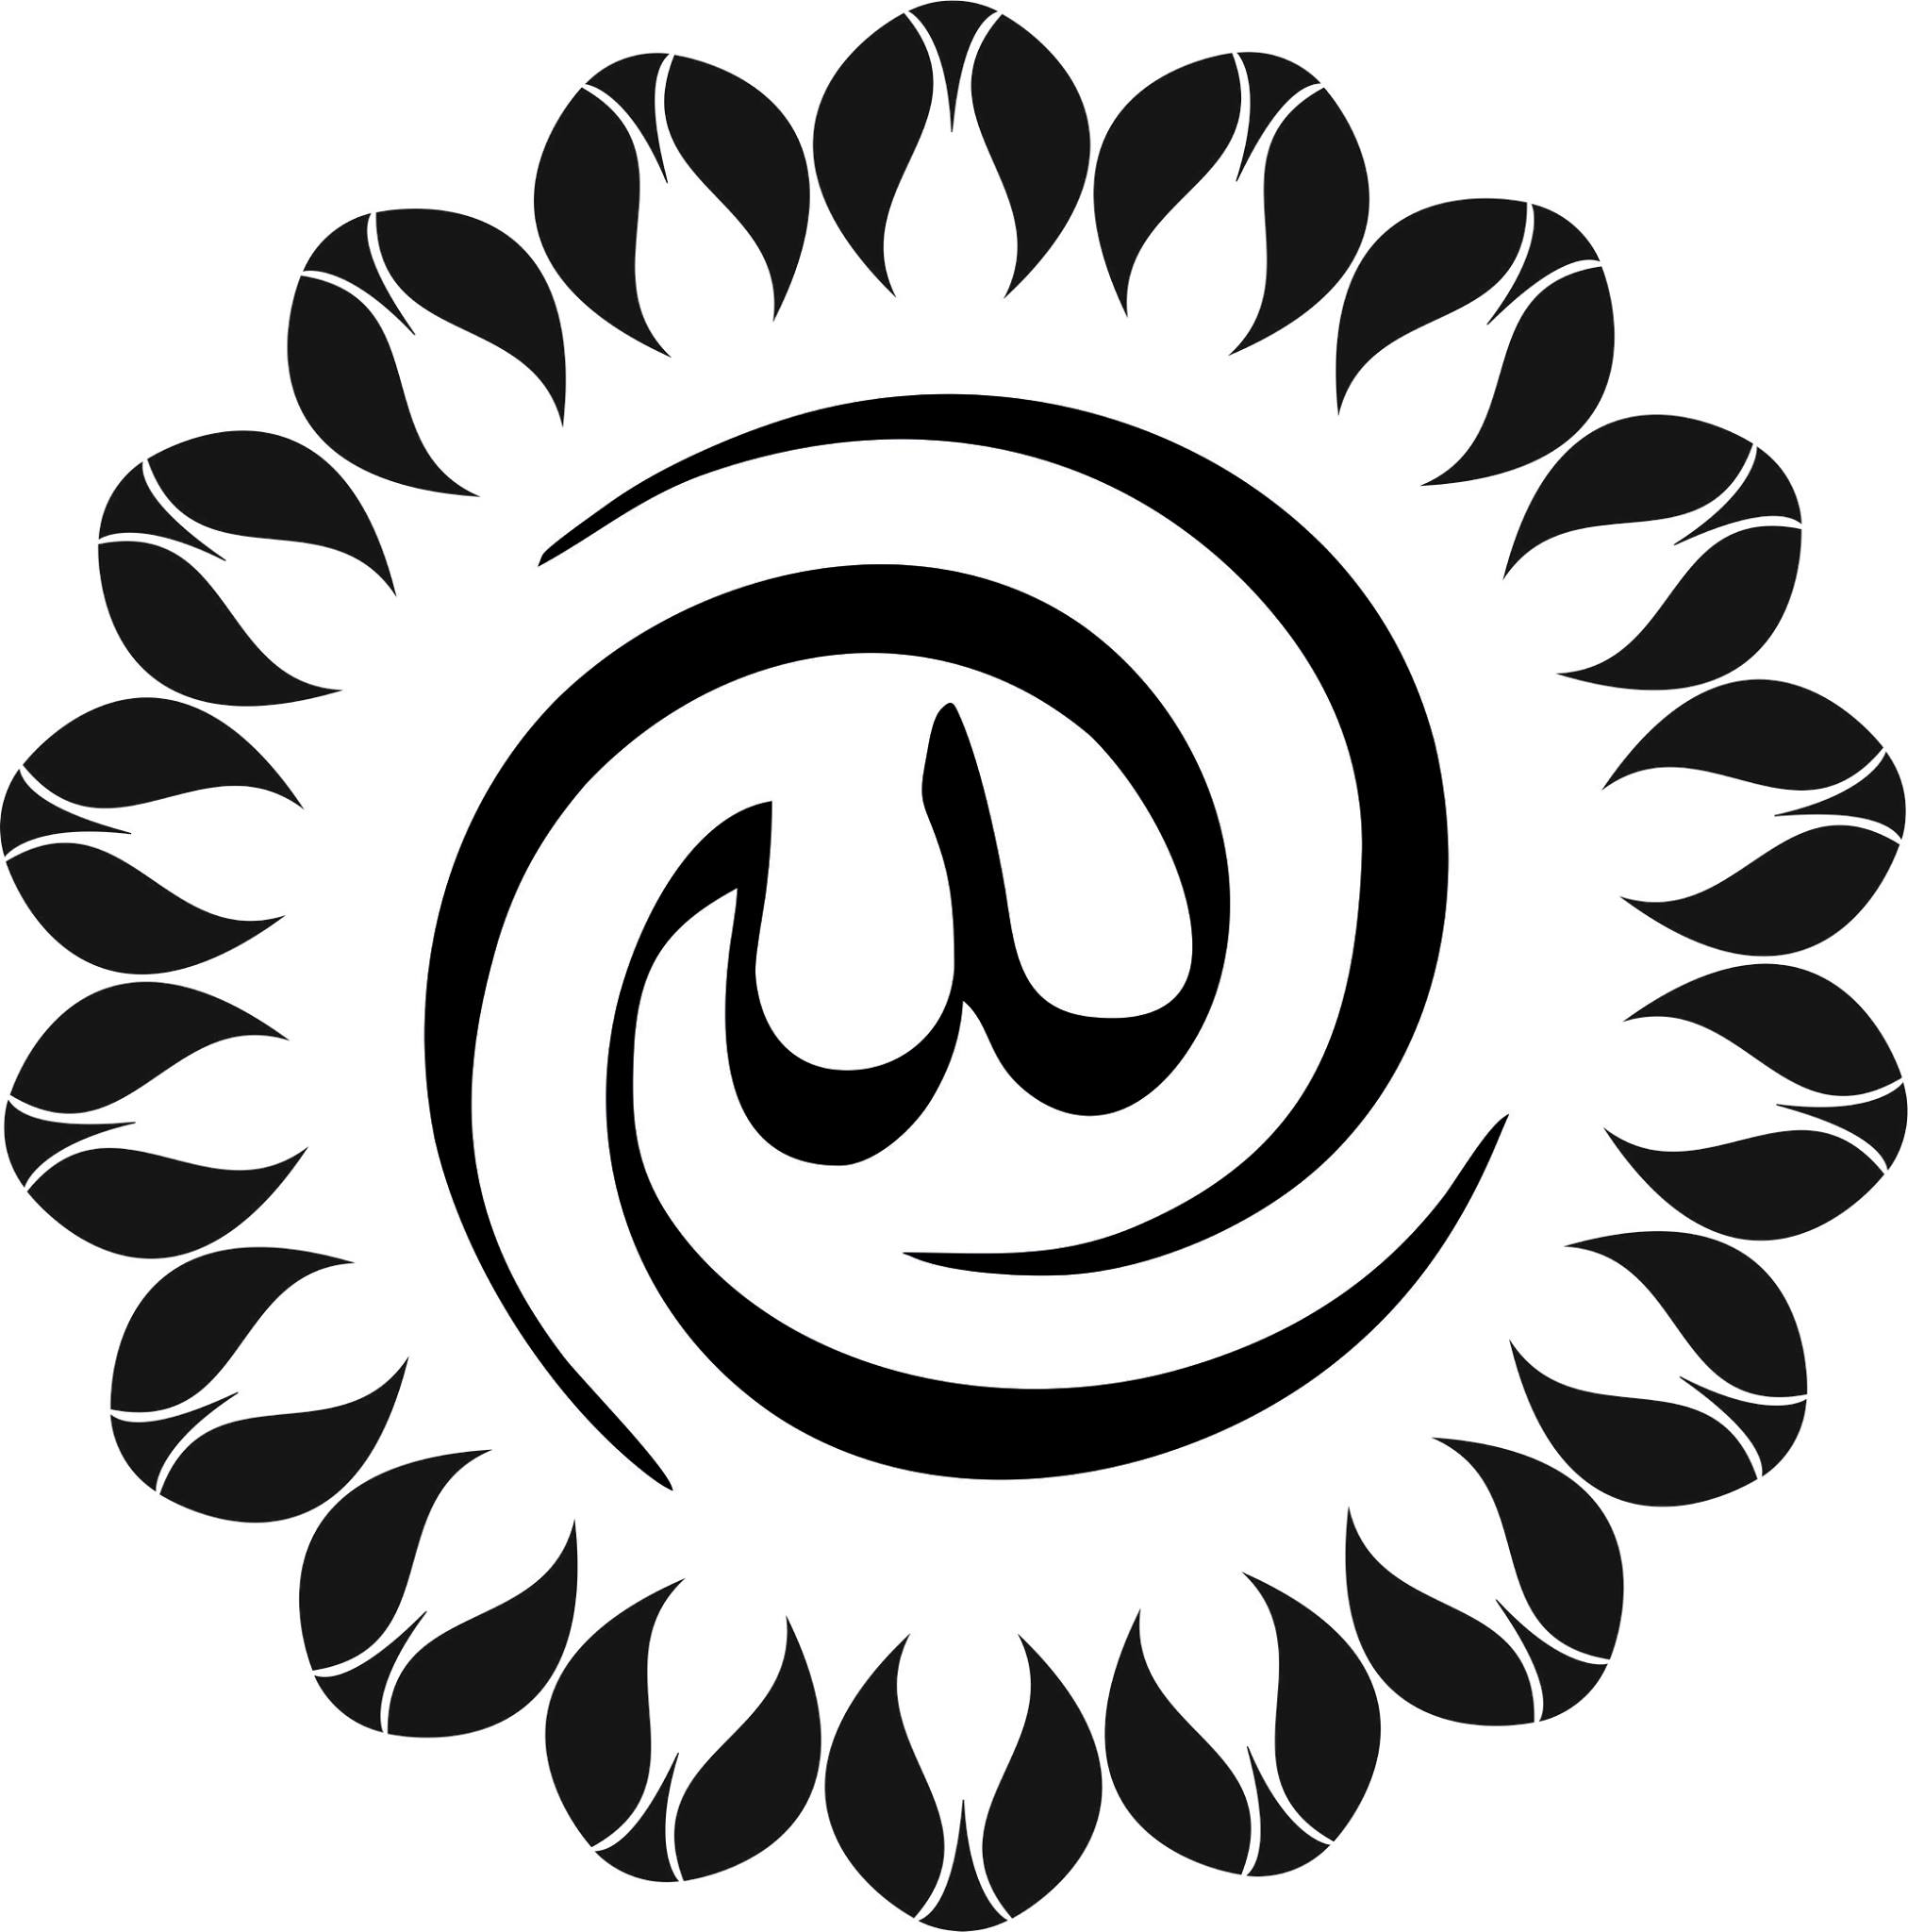 Allah en caligrafía árabe Vector Art jpg Imagen